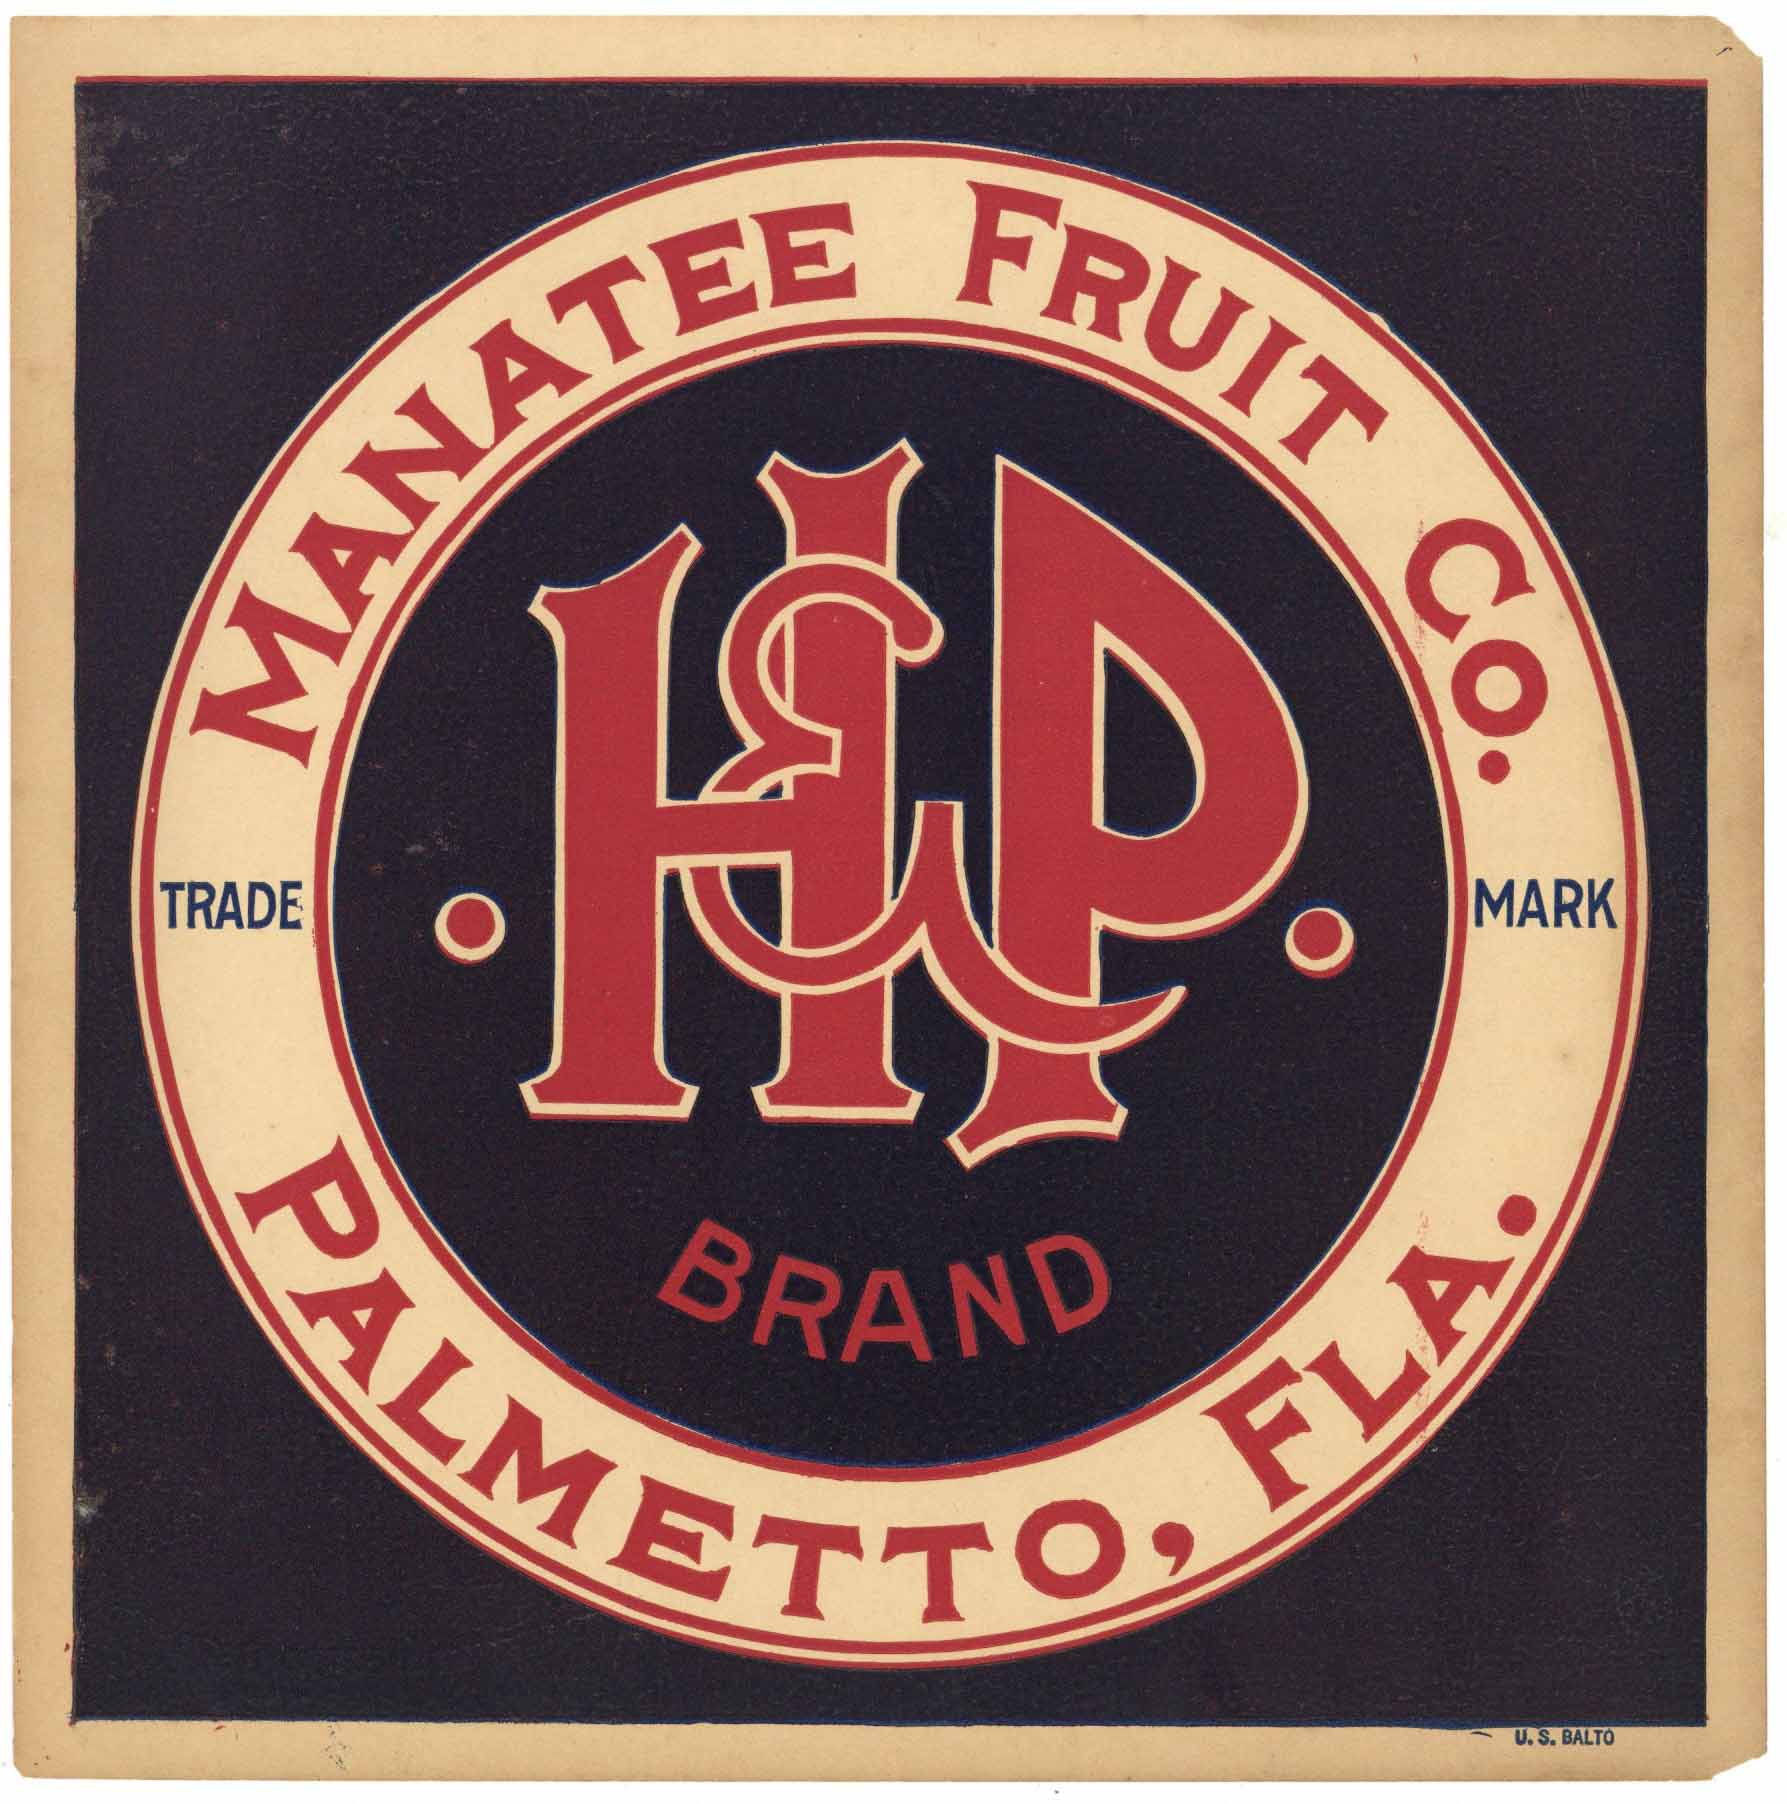 H & P Brand Vintage Palmetto Florida Citrus Crate Label, early version